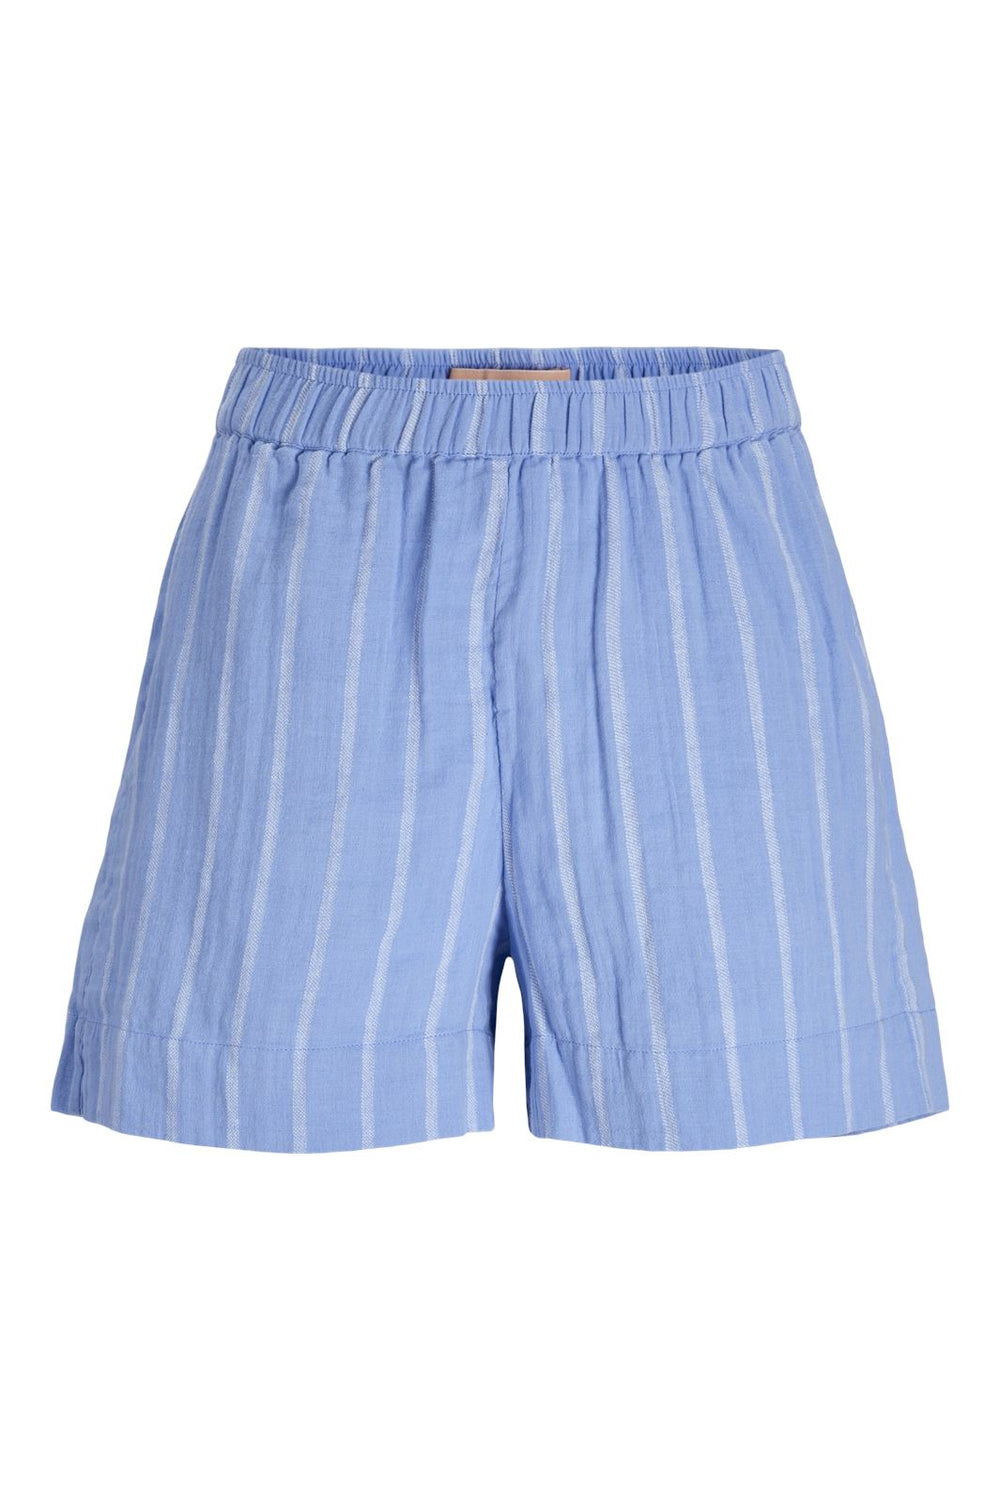 Jjxx - Jxmia Muslin Shorts - 4486806 Silver Lake Blue Stripes